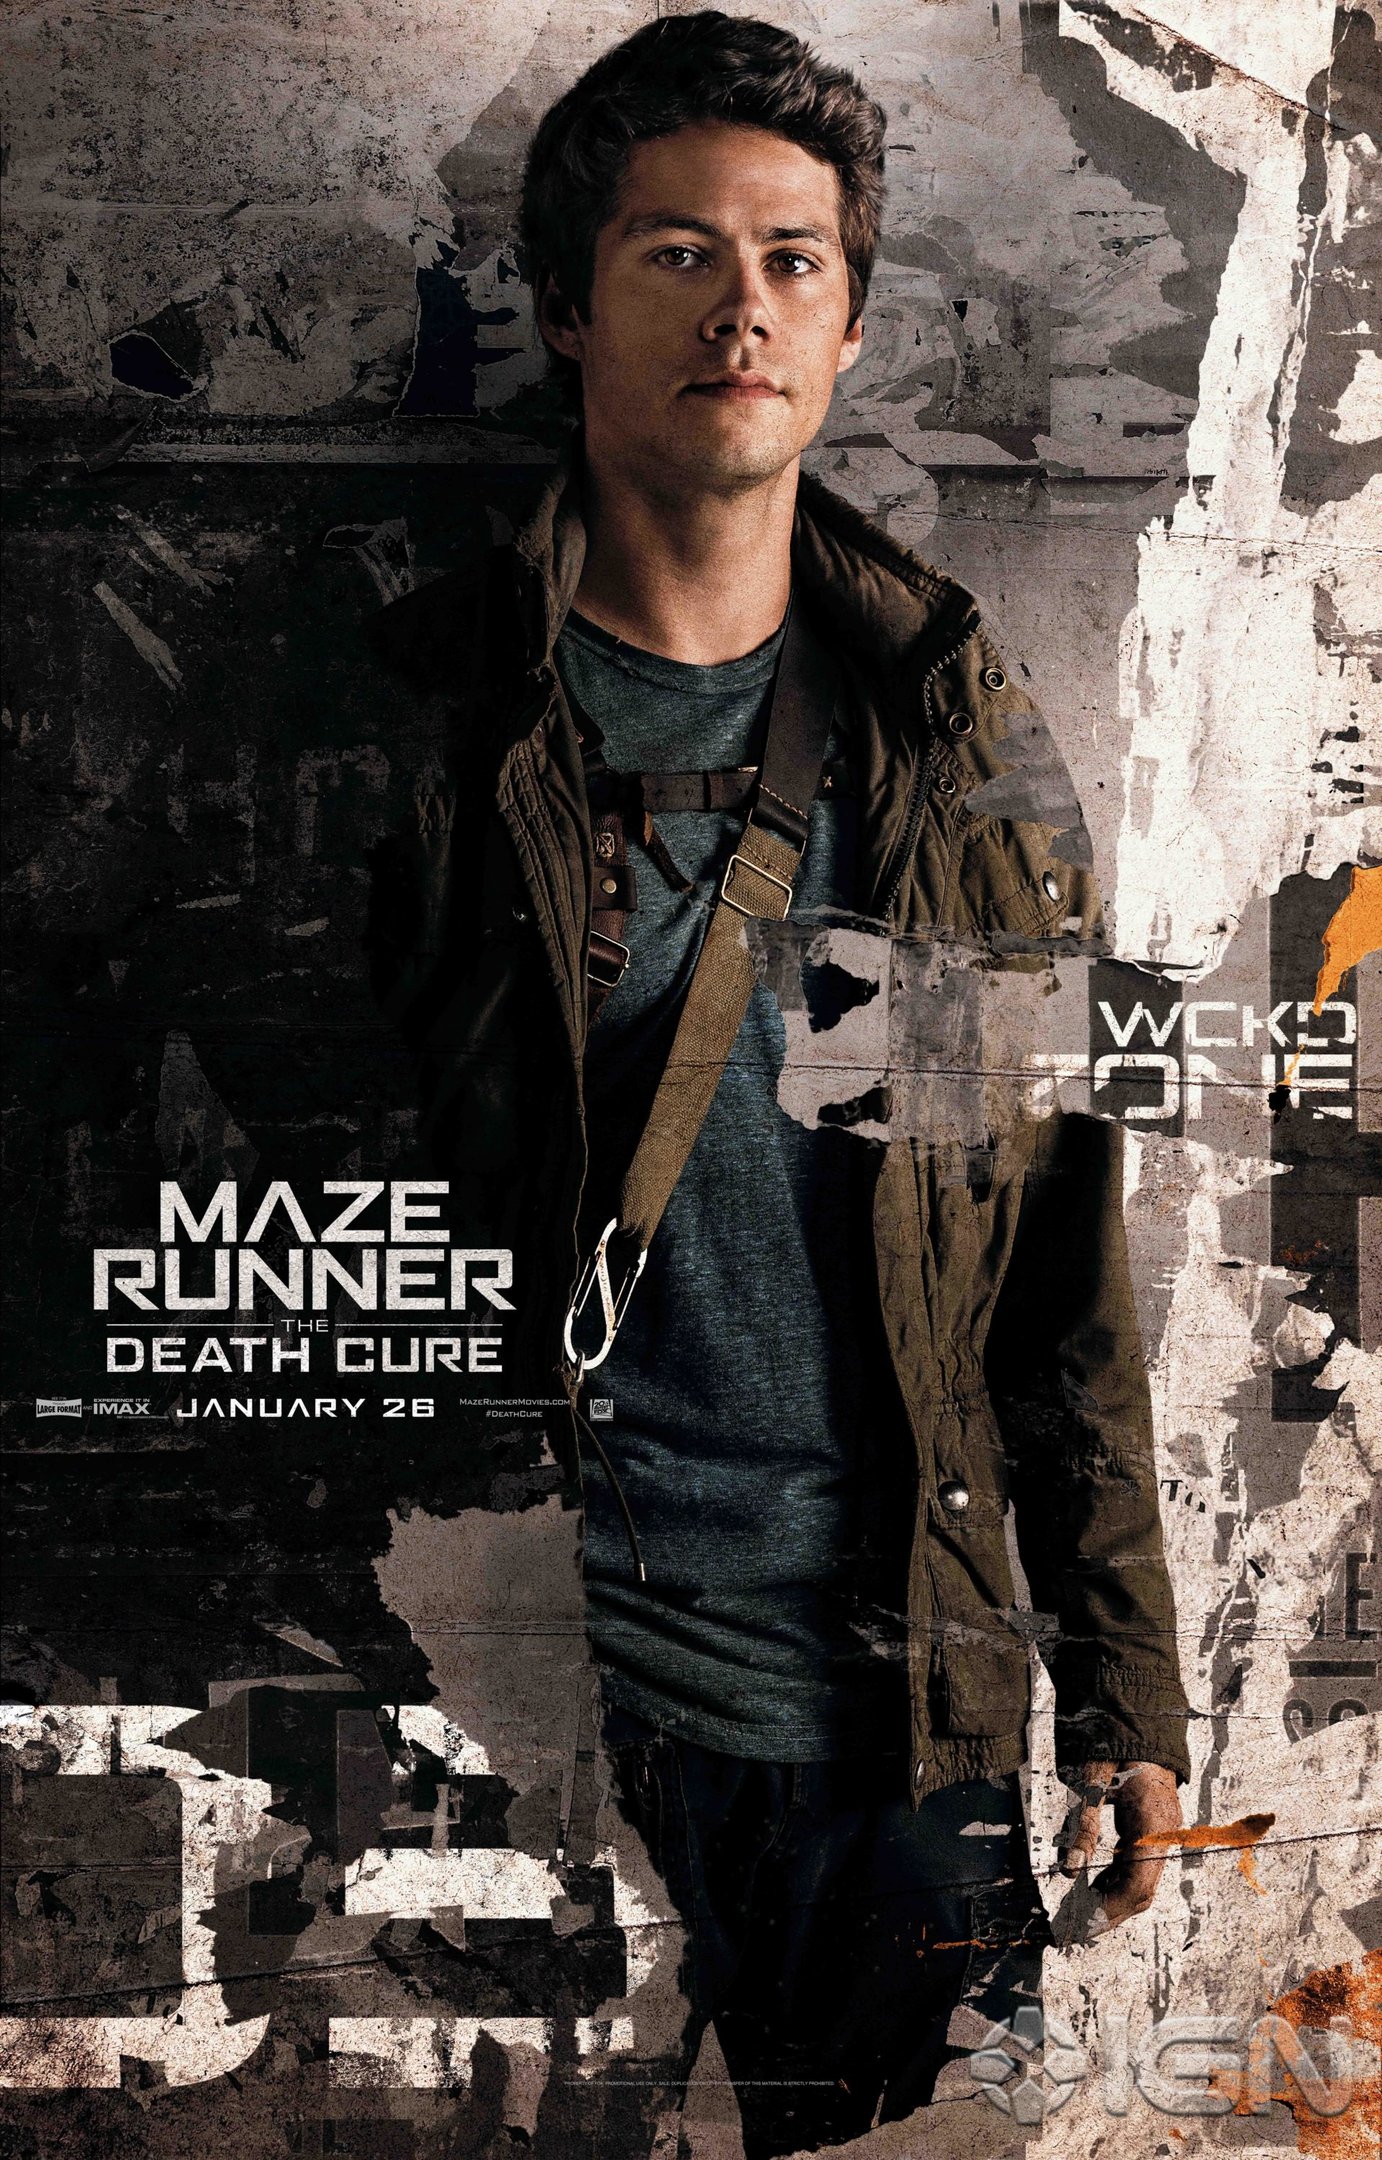 Maze Runner - A Cura Mortal ultrapassa Jumanji e lidera bilheteria dos EUA  - NerdBunker